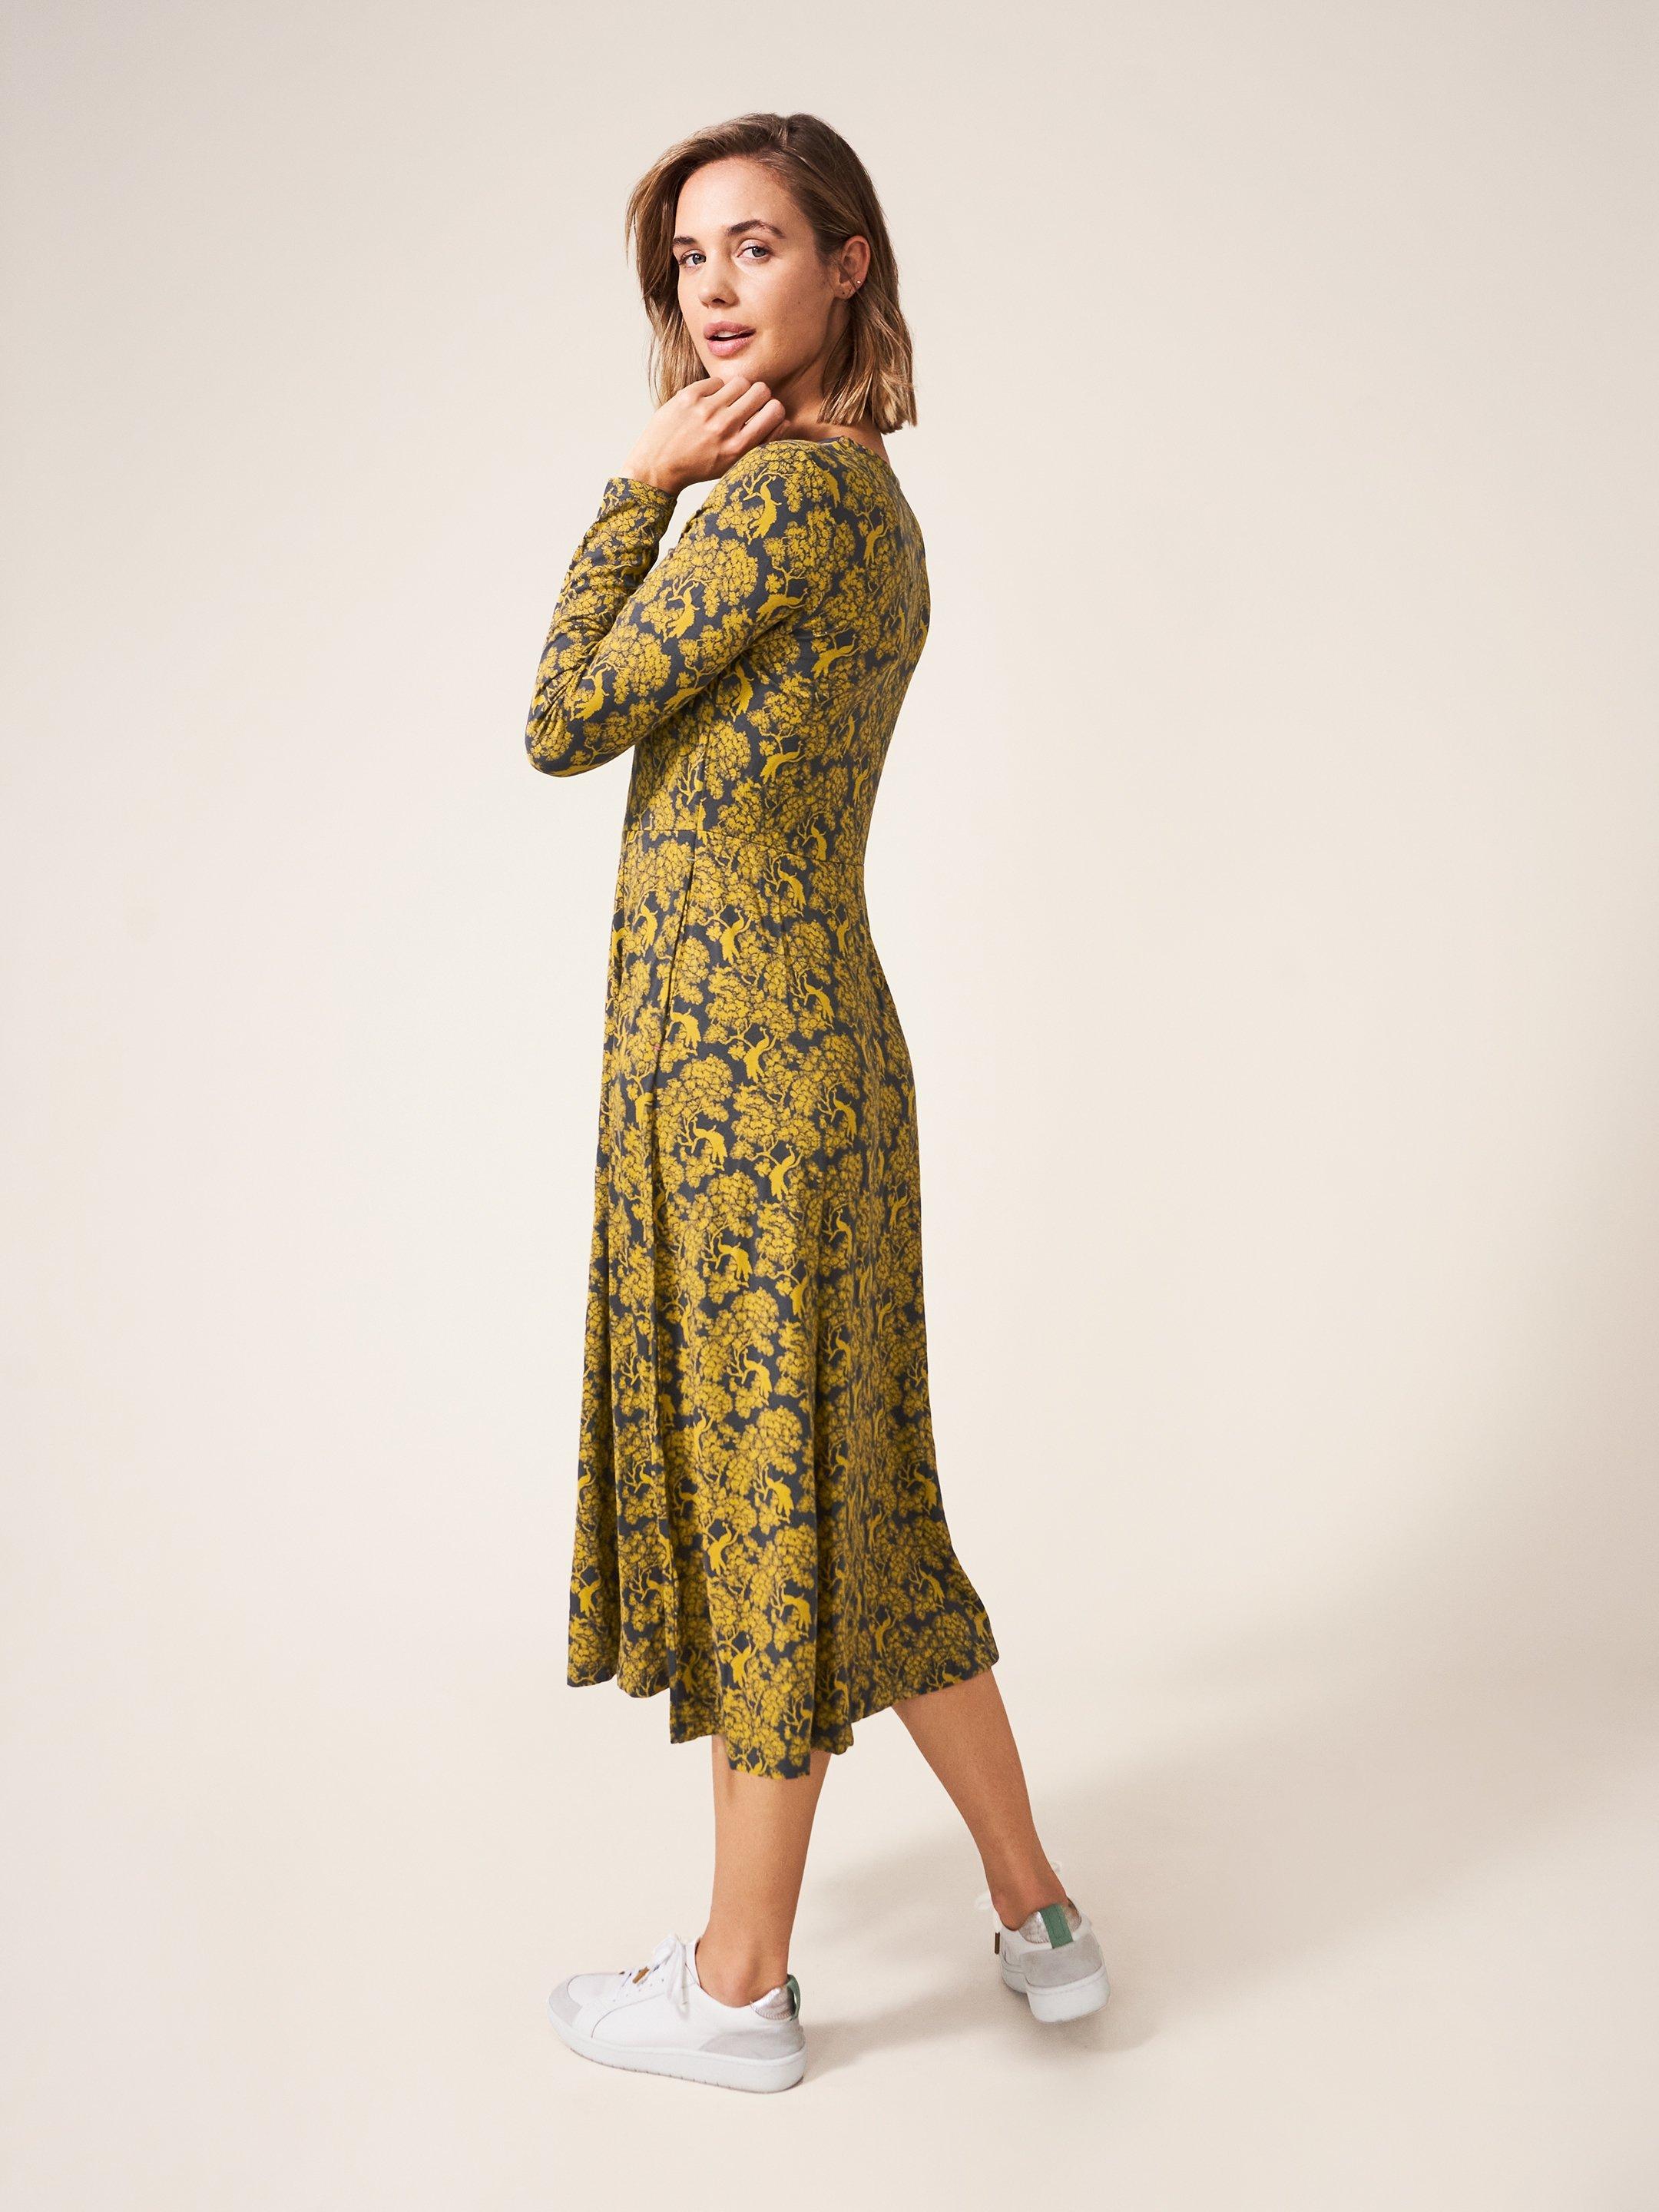 Madeline Eco Vero Jersey Dress in CHART MLT - MODEL BACK